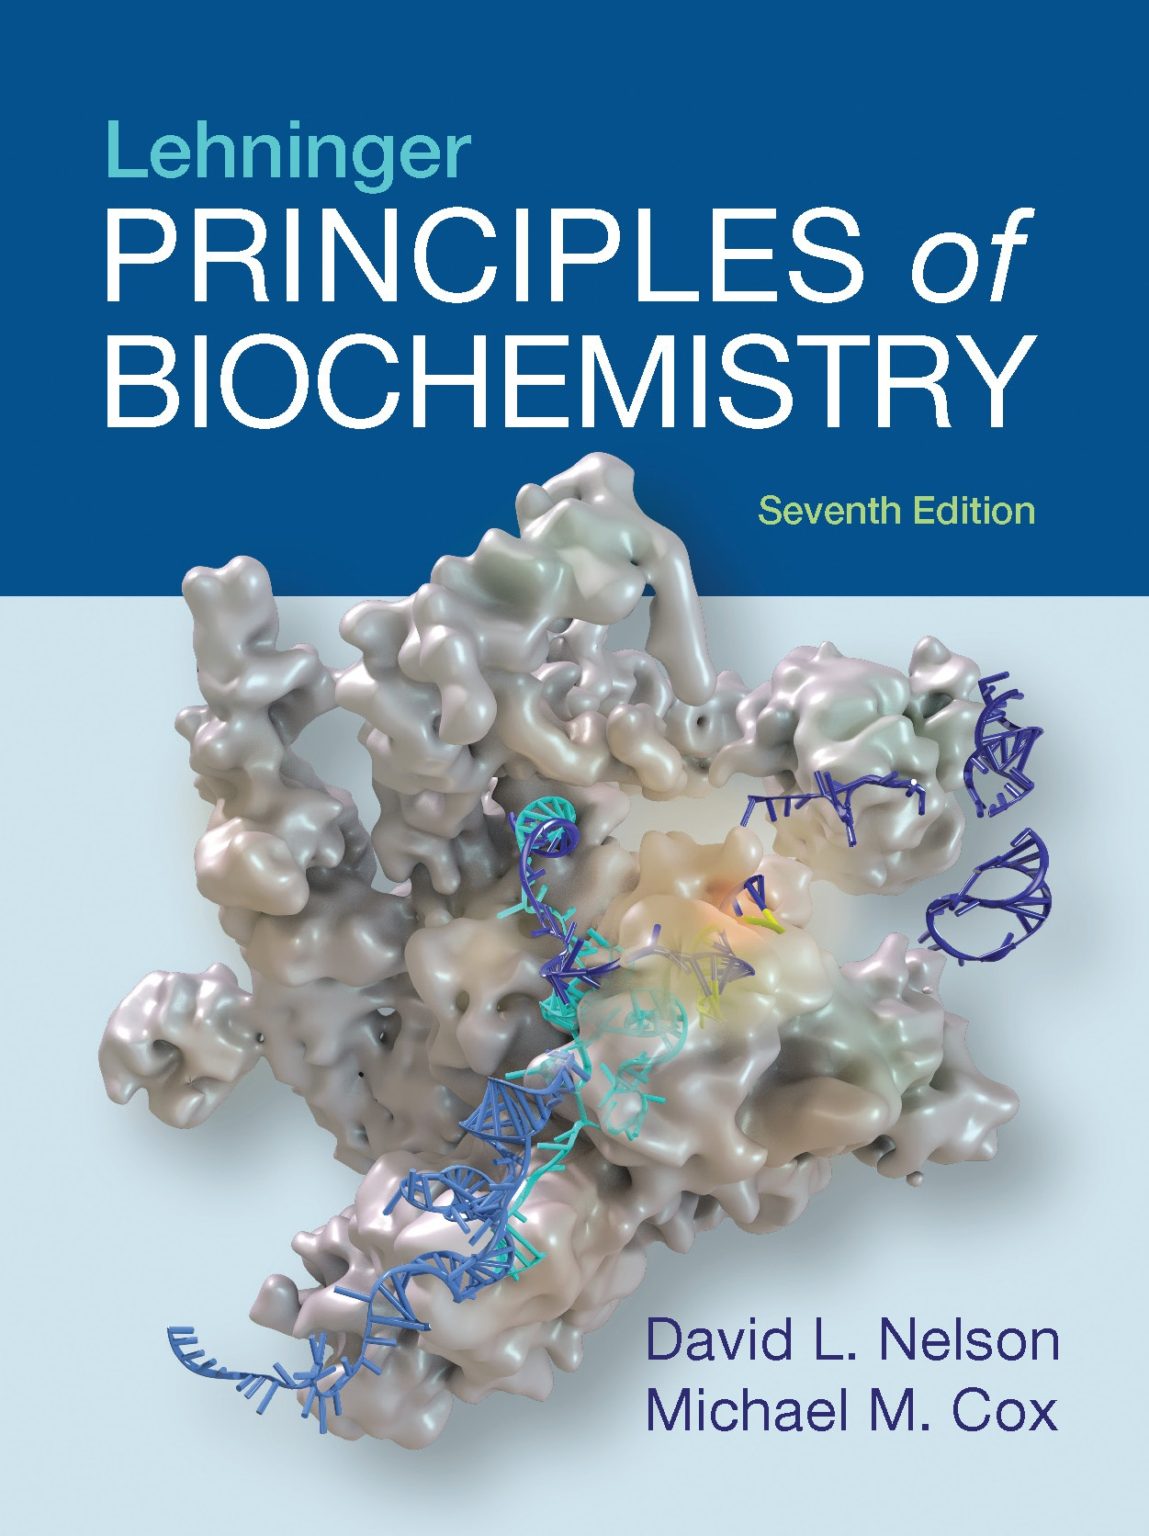 Principles of Biochemistry by Albert L. Lehninger